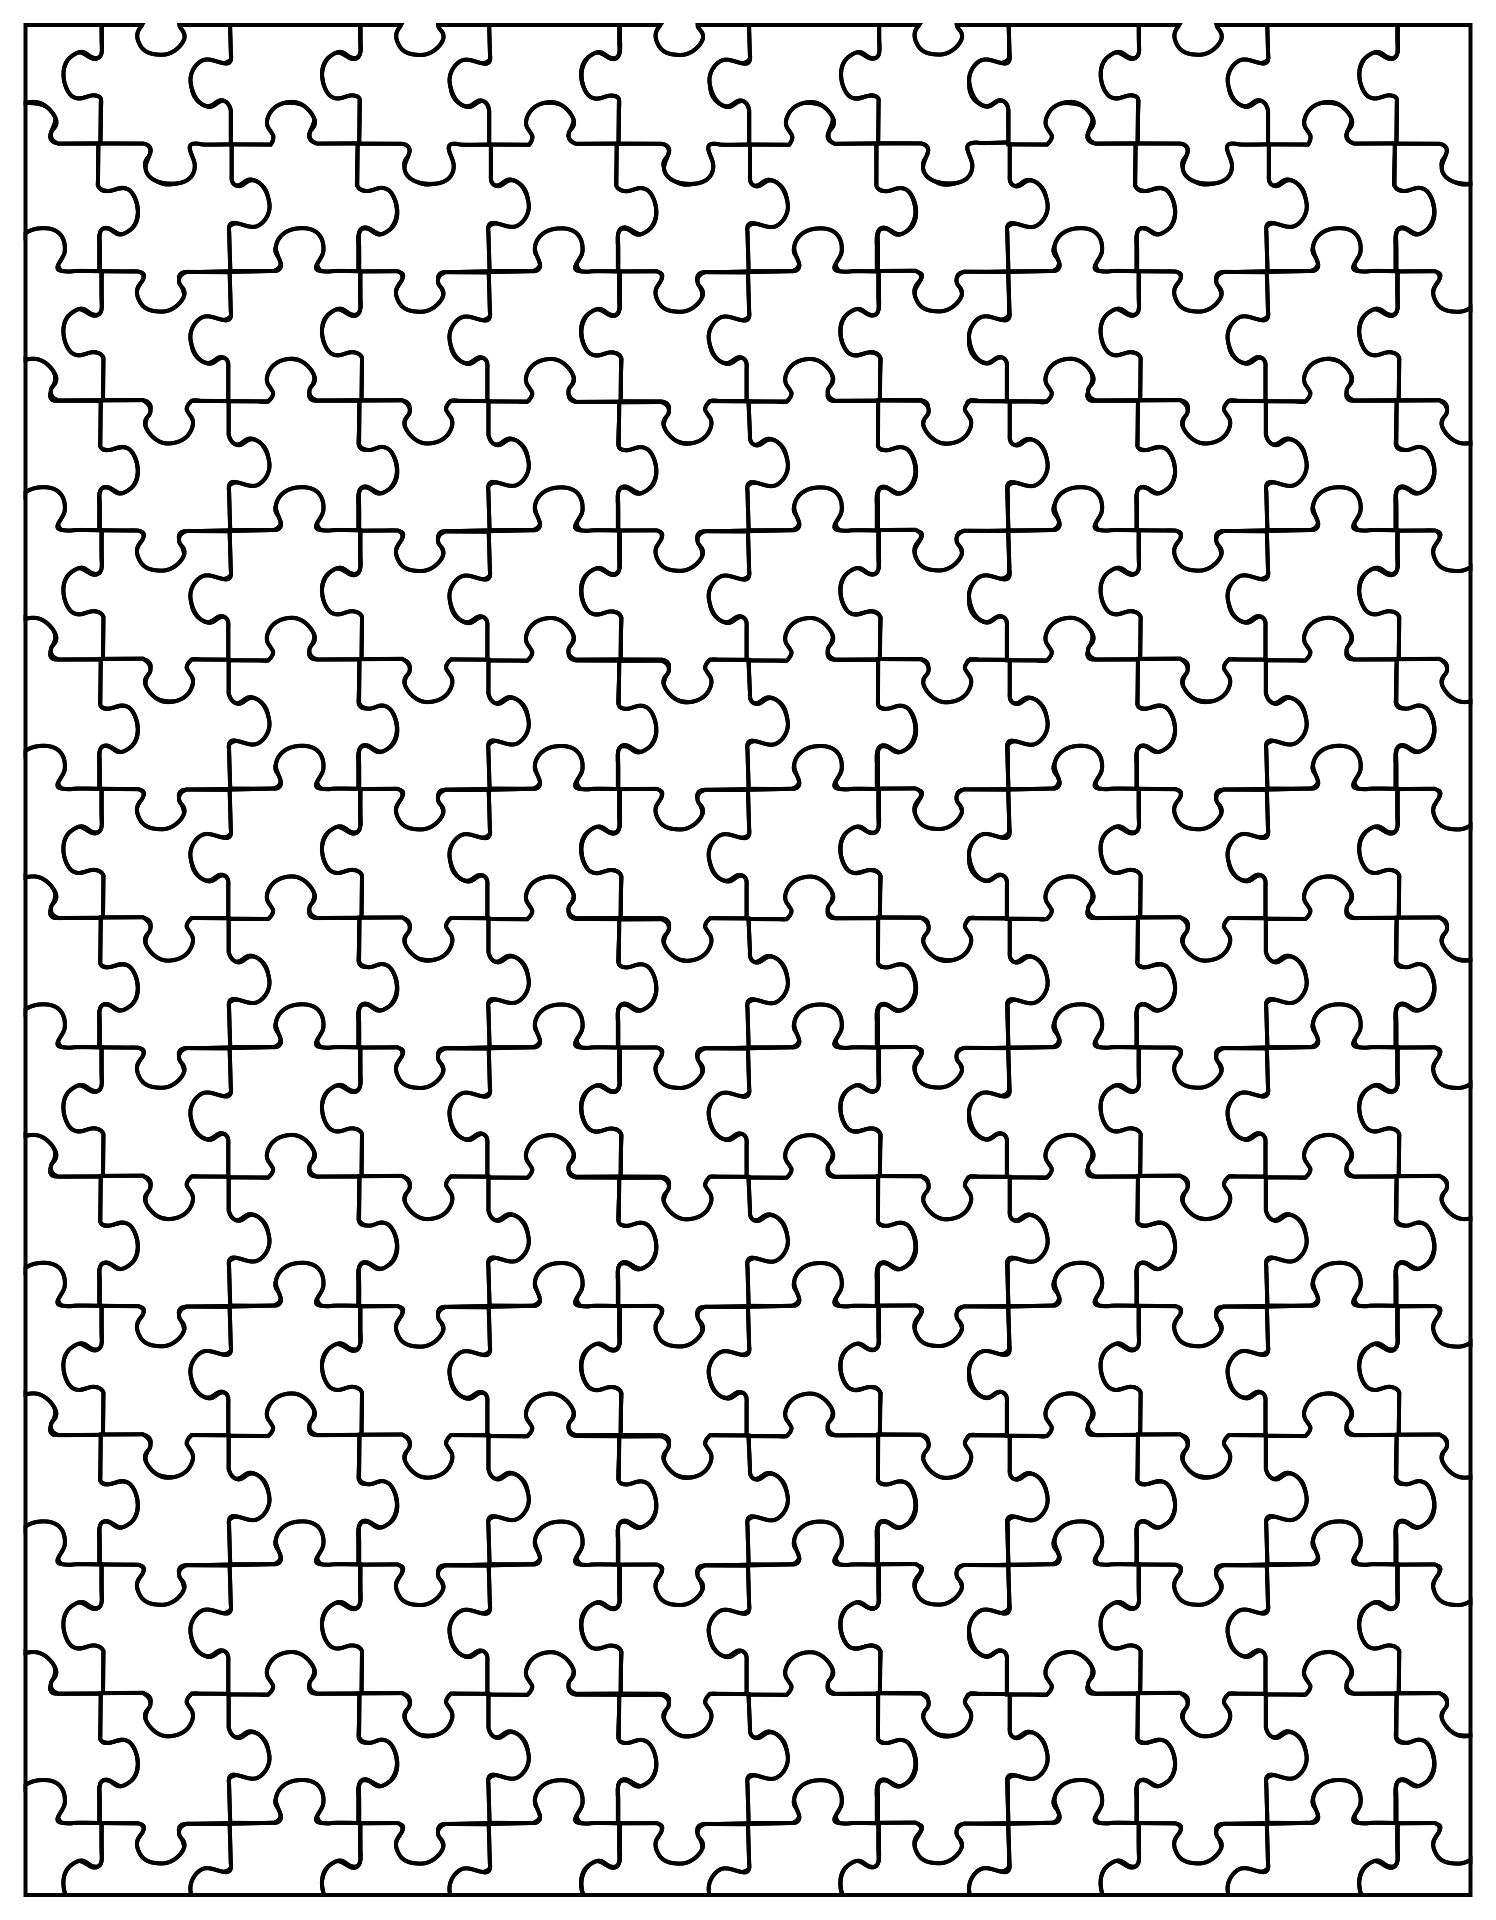 printable-jigsaw-puzzle